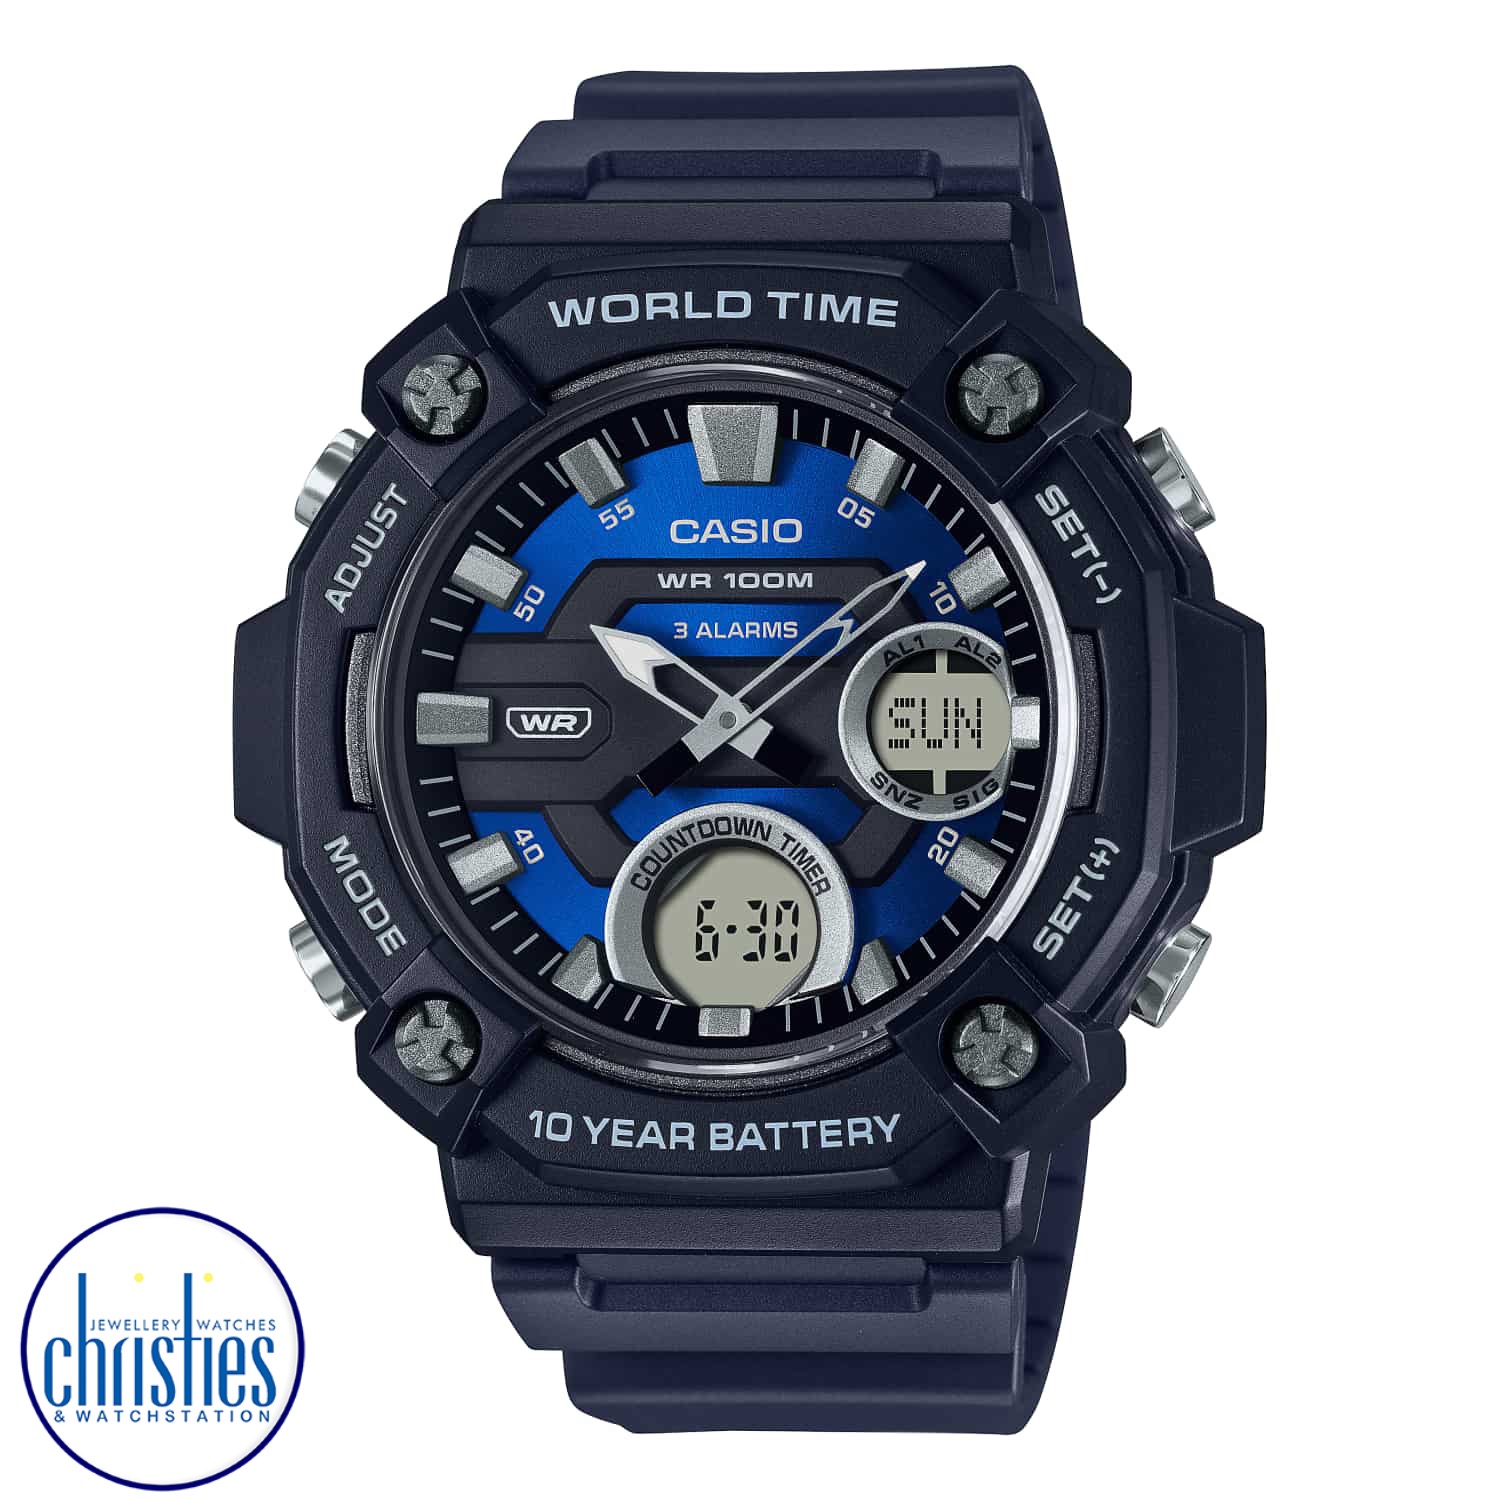 AEQ120W-2A Casio 100 Metre 10 Year Battery Watch cheap casio watches nz